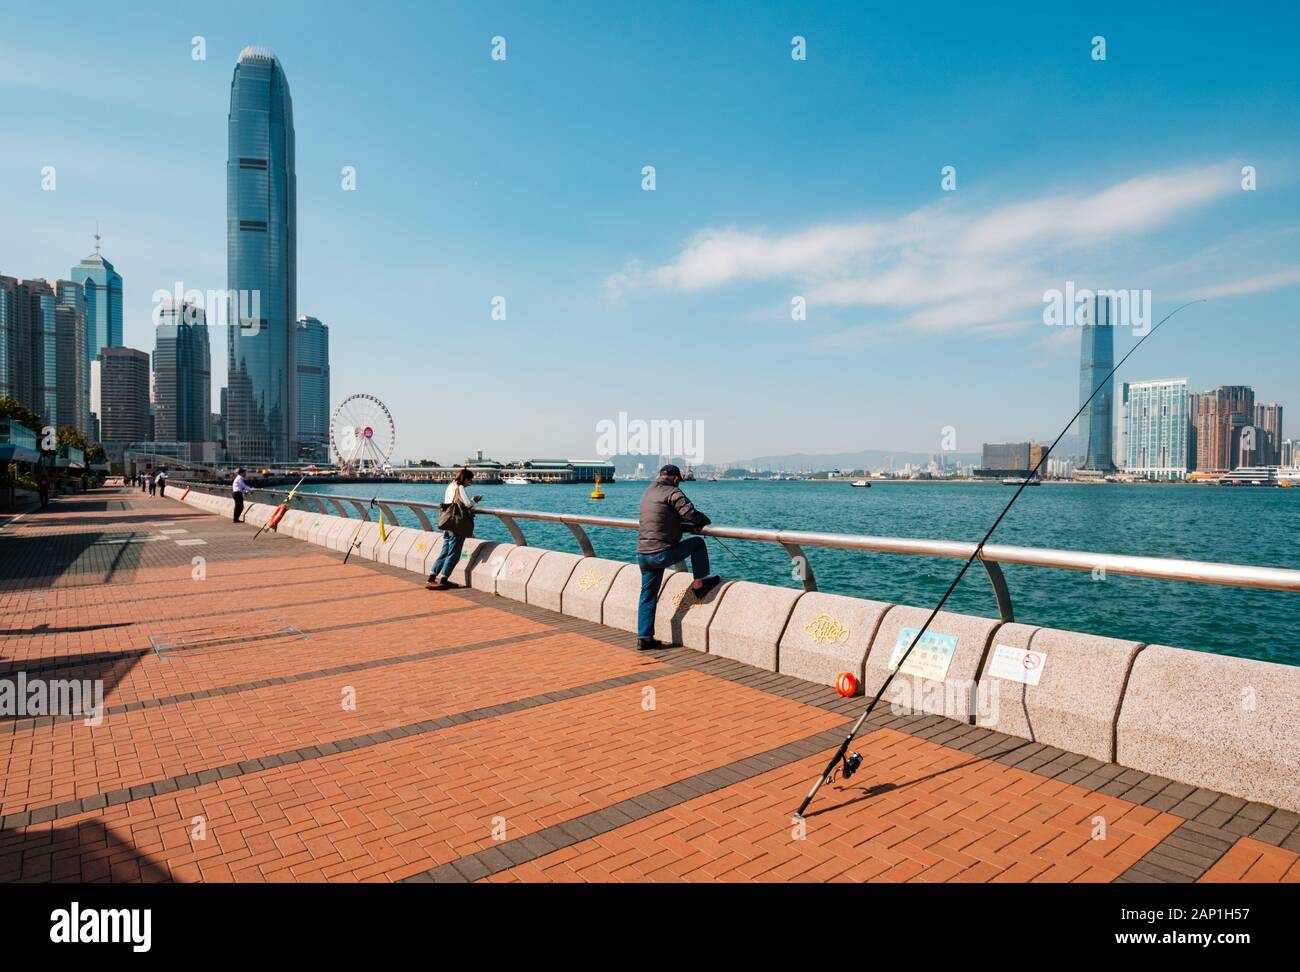 HongKong, China - November, 2019: Menschen mit Angelrute auf Ozean Küste in HongKong, Victoria Harbour. Stockfoto